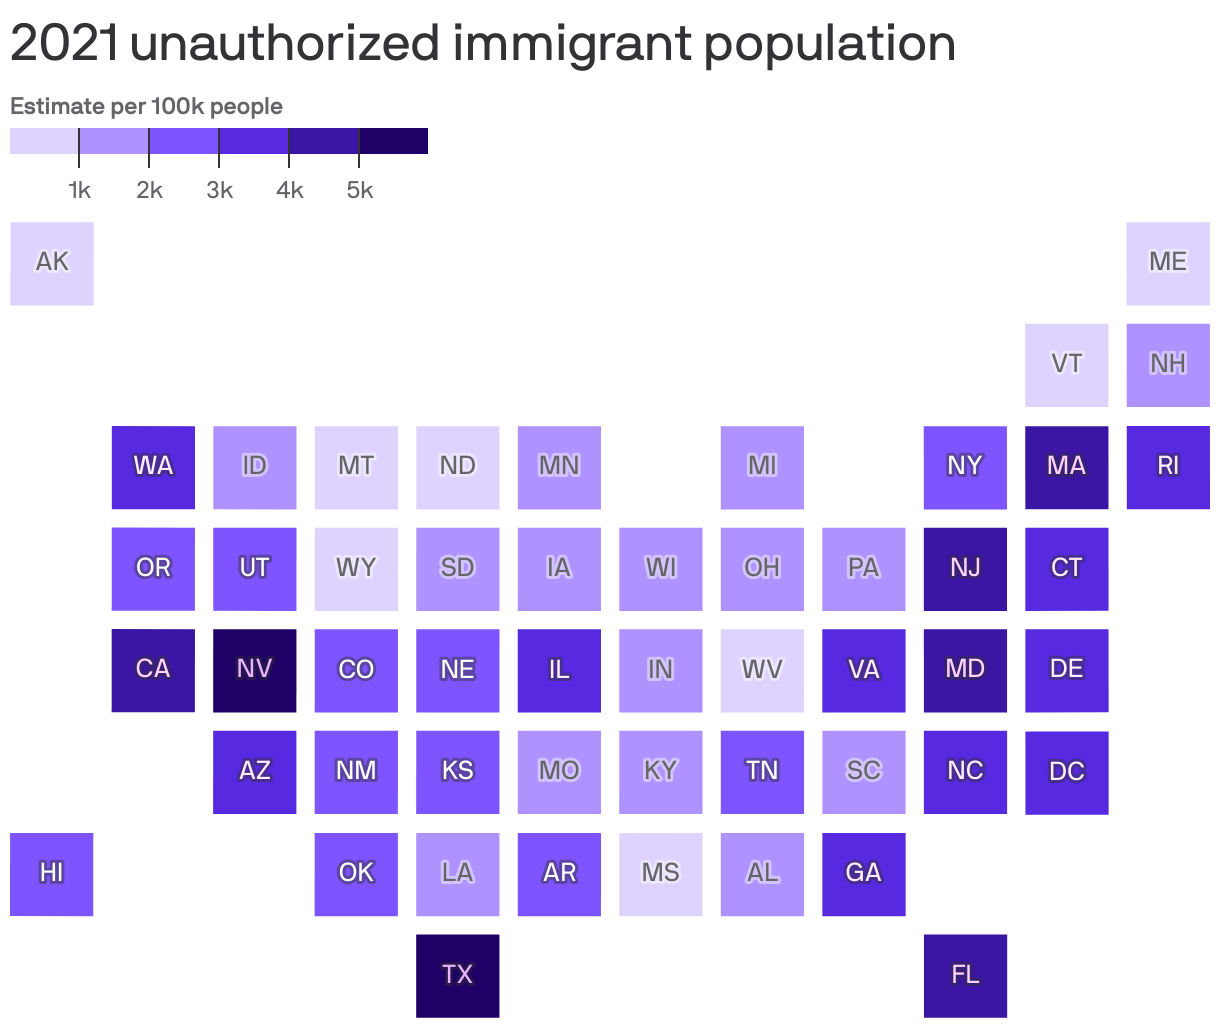 2021 unauthorized immigrant population